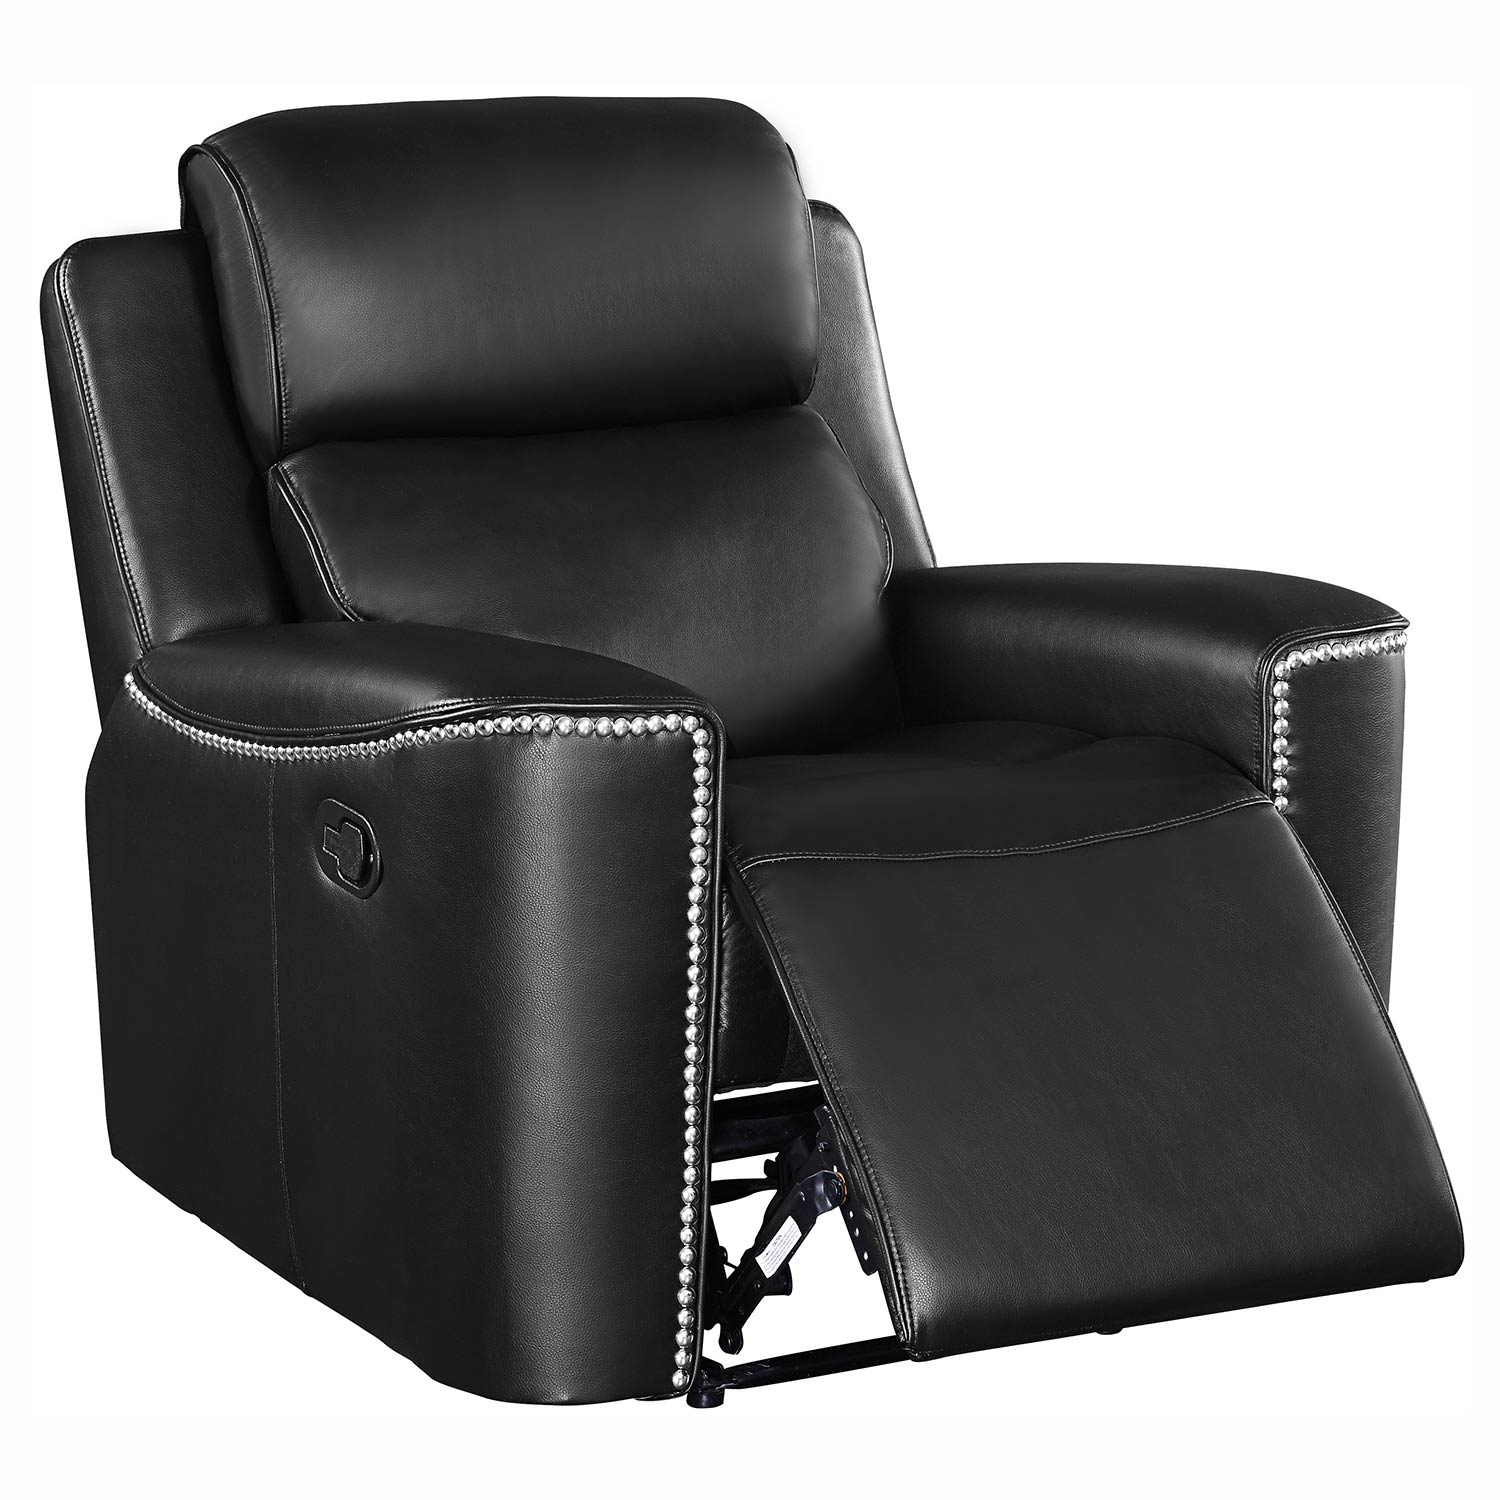 Homelegance Altair Reclining Chair - Black